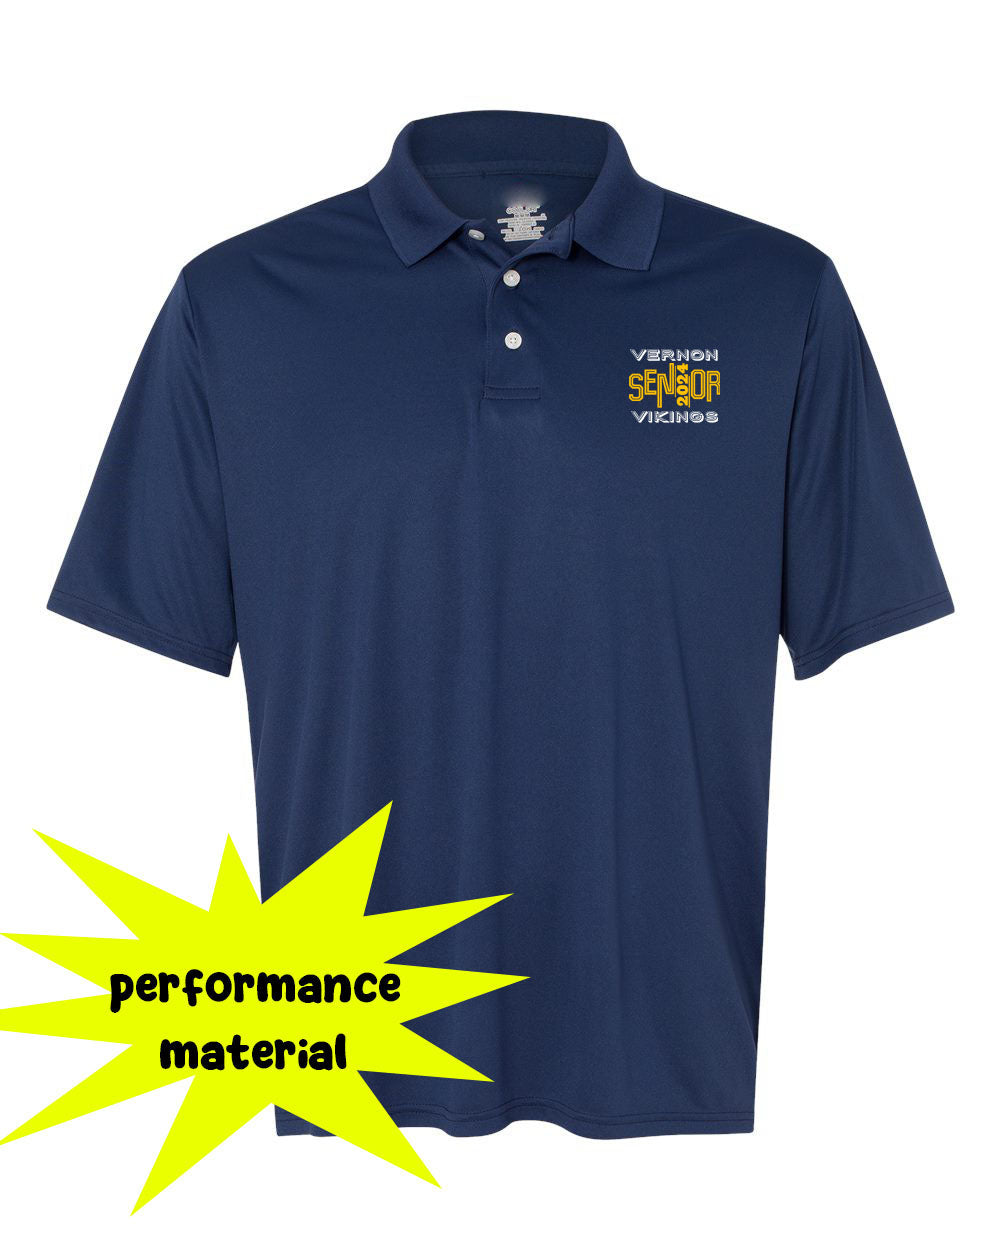 VTHS Design 6 Performance Material Polo T-Shirt